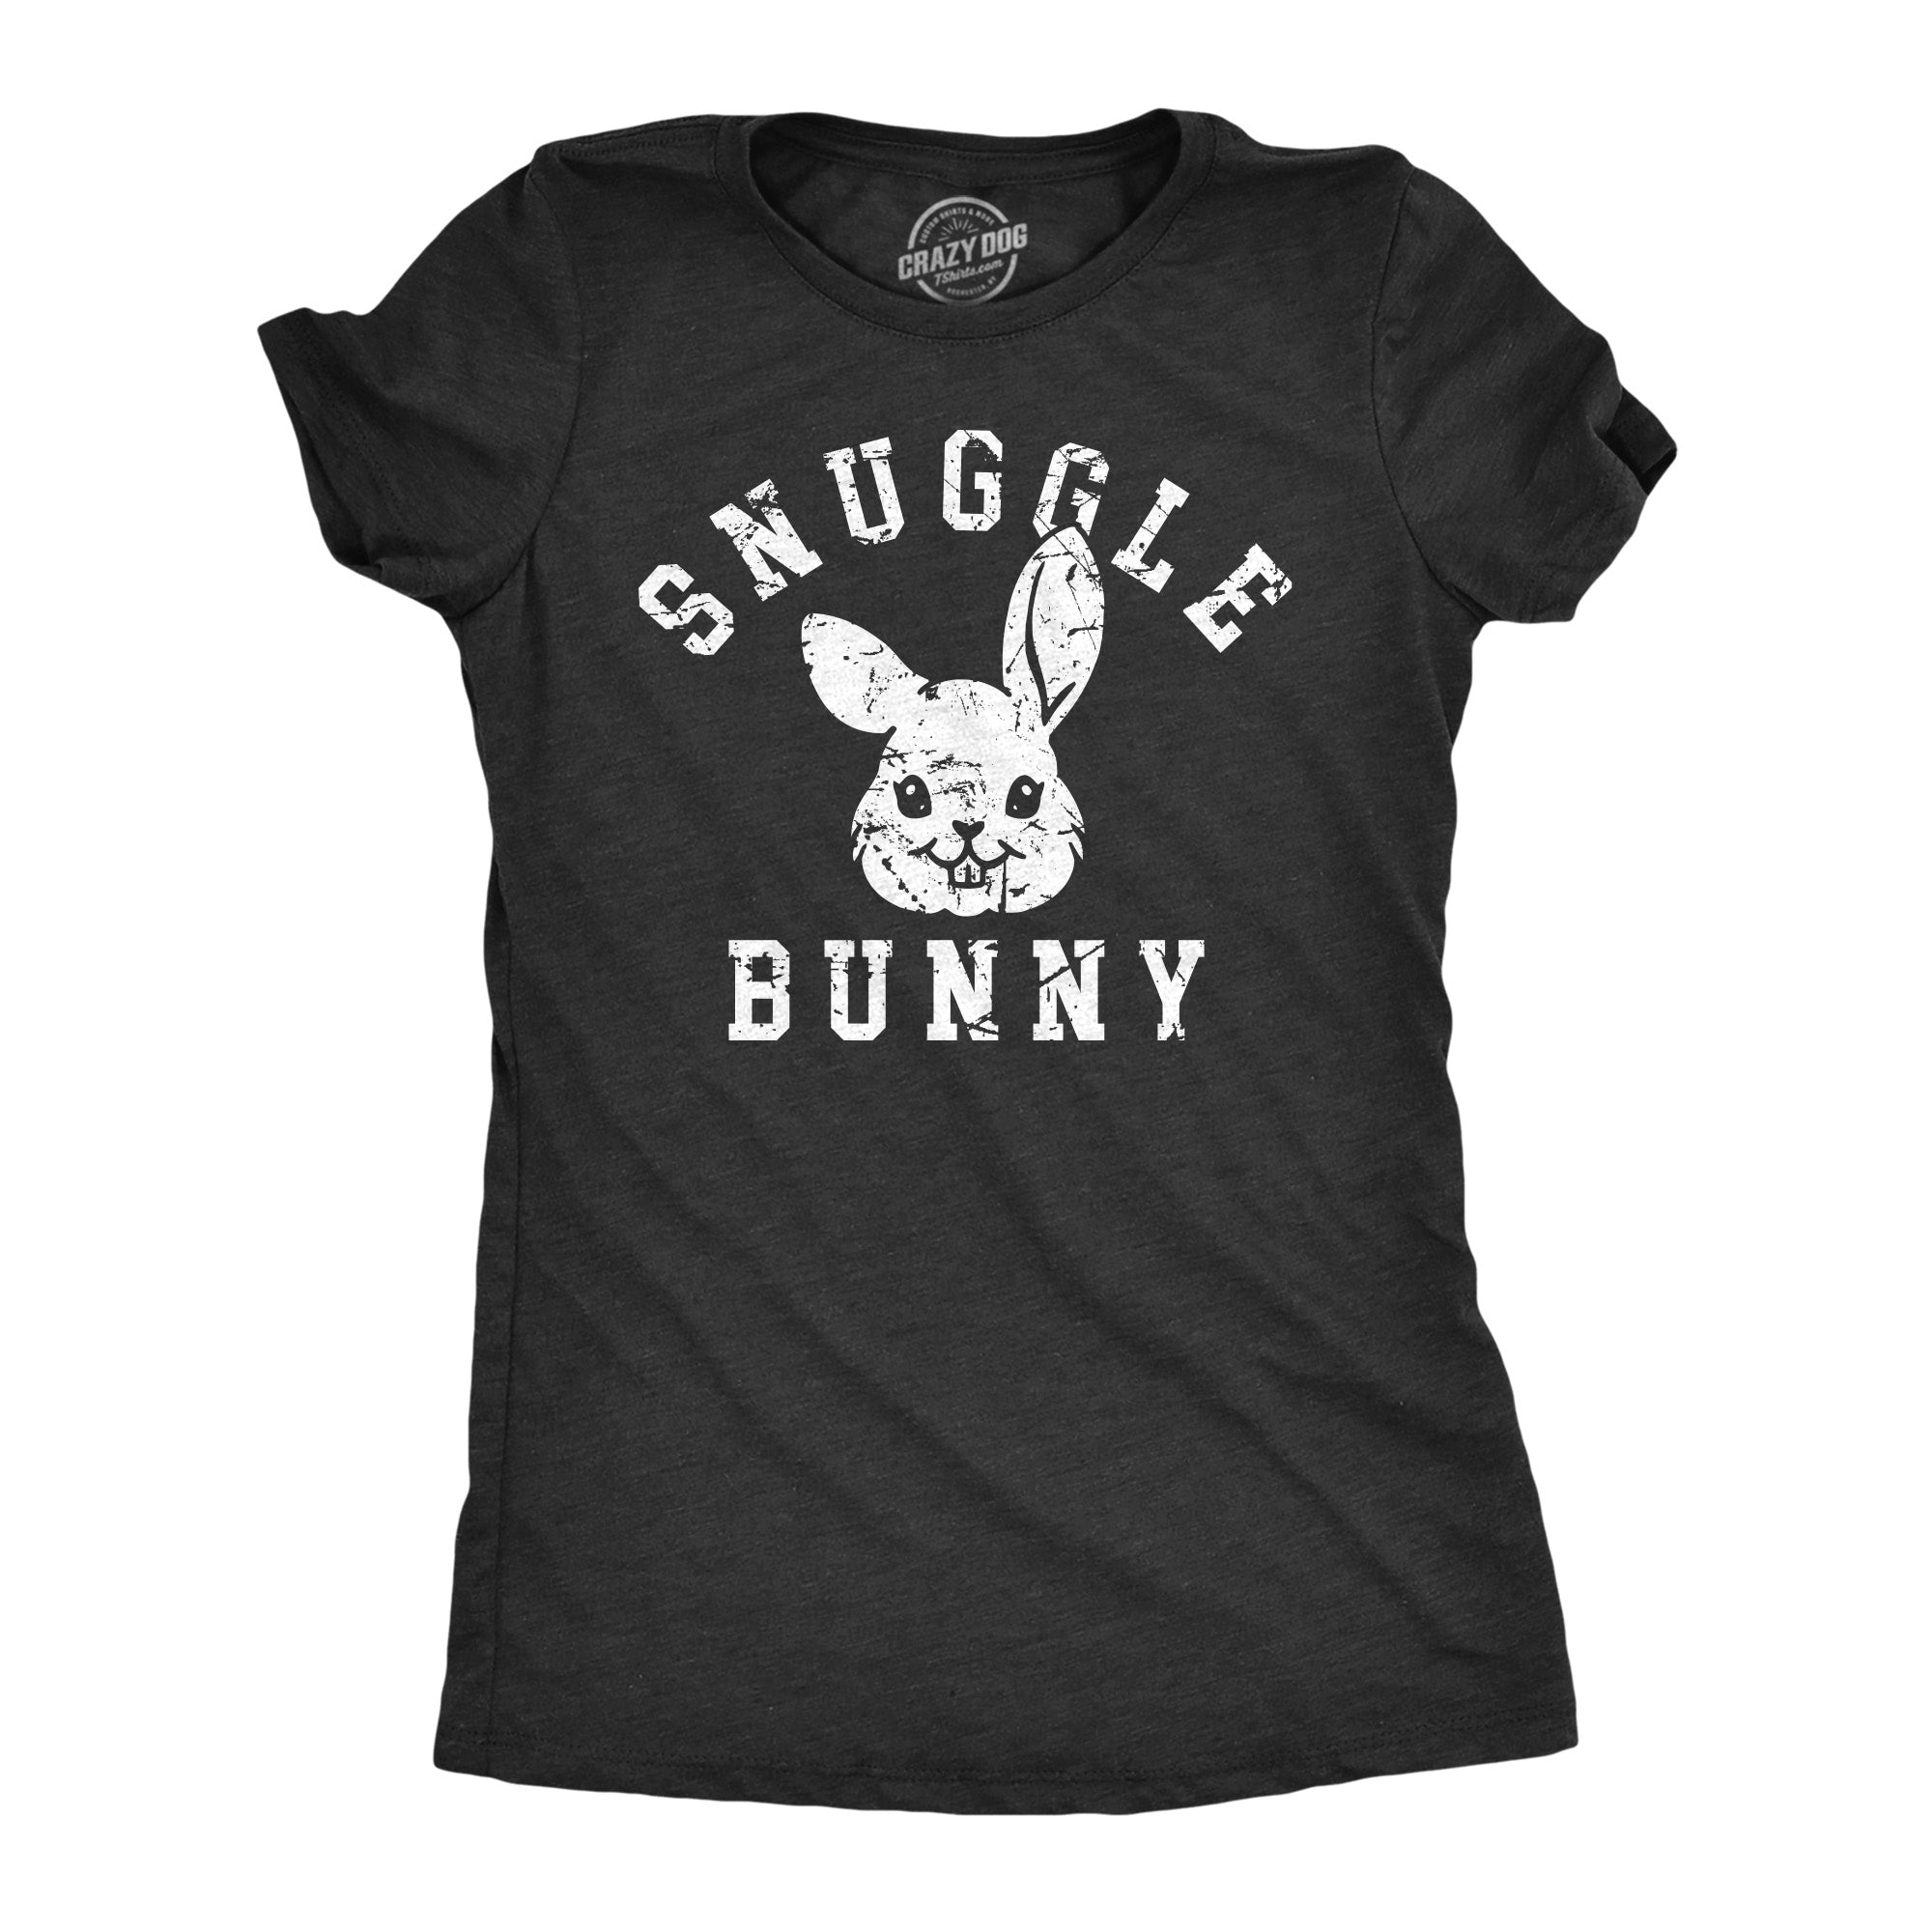 Funny Heather Black - Snuggle Bunny Snuggle Bunny Womens T Shirt Nerdy Easter animal Tee